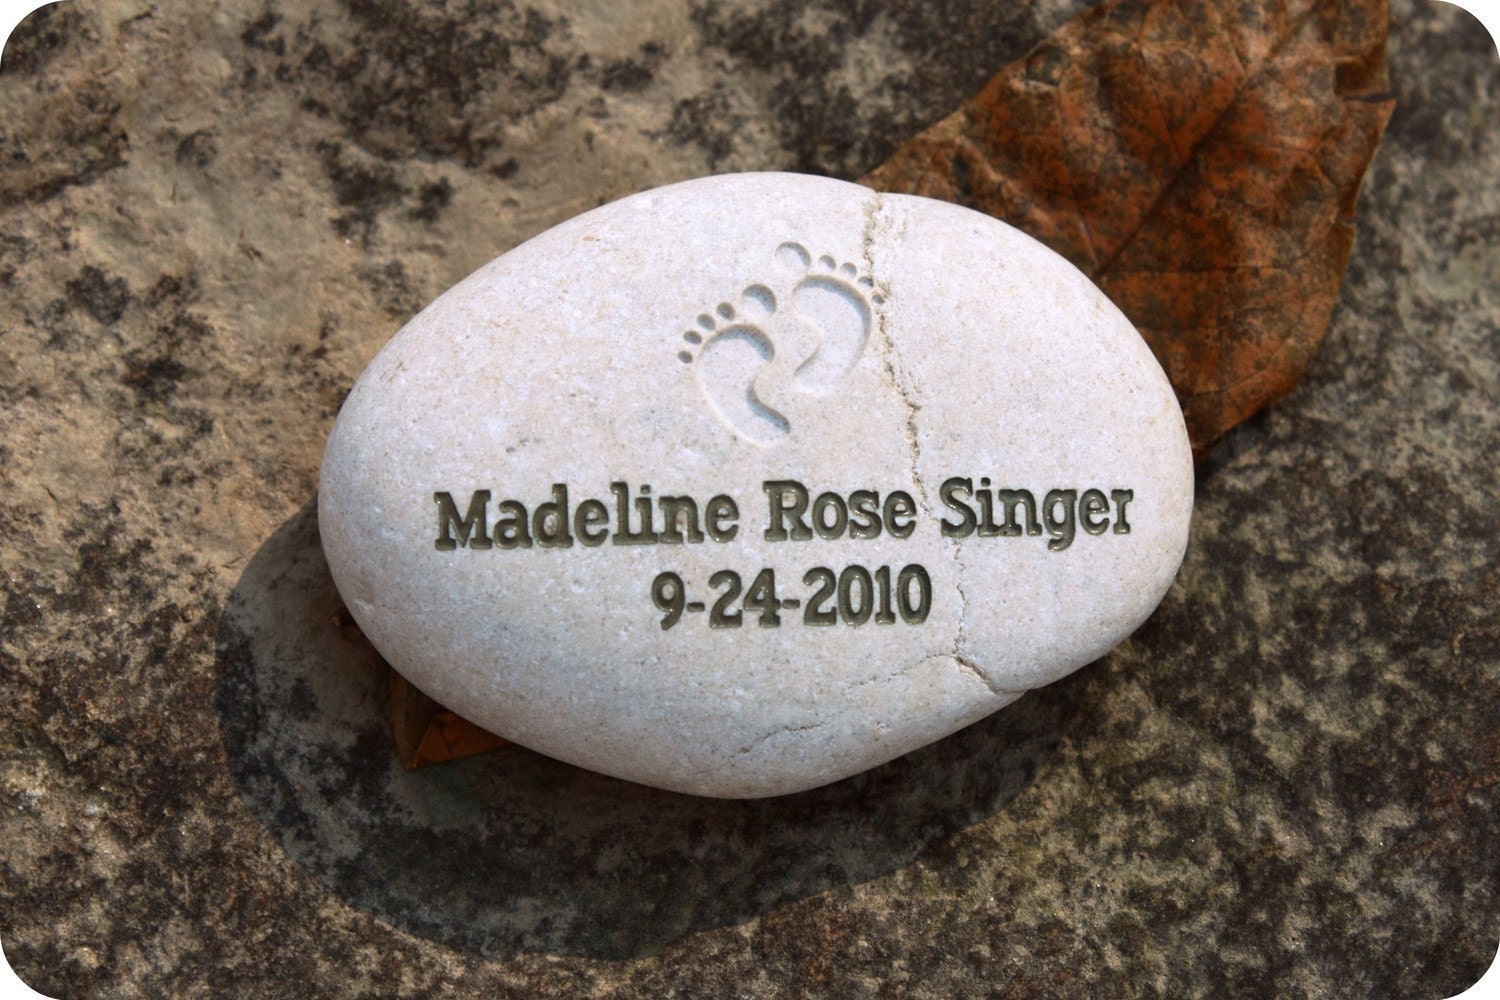 Infant loss memorial stone